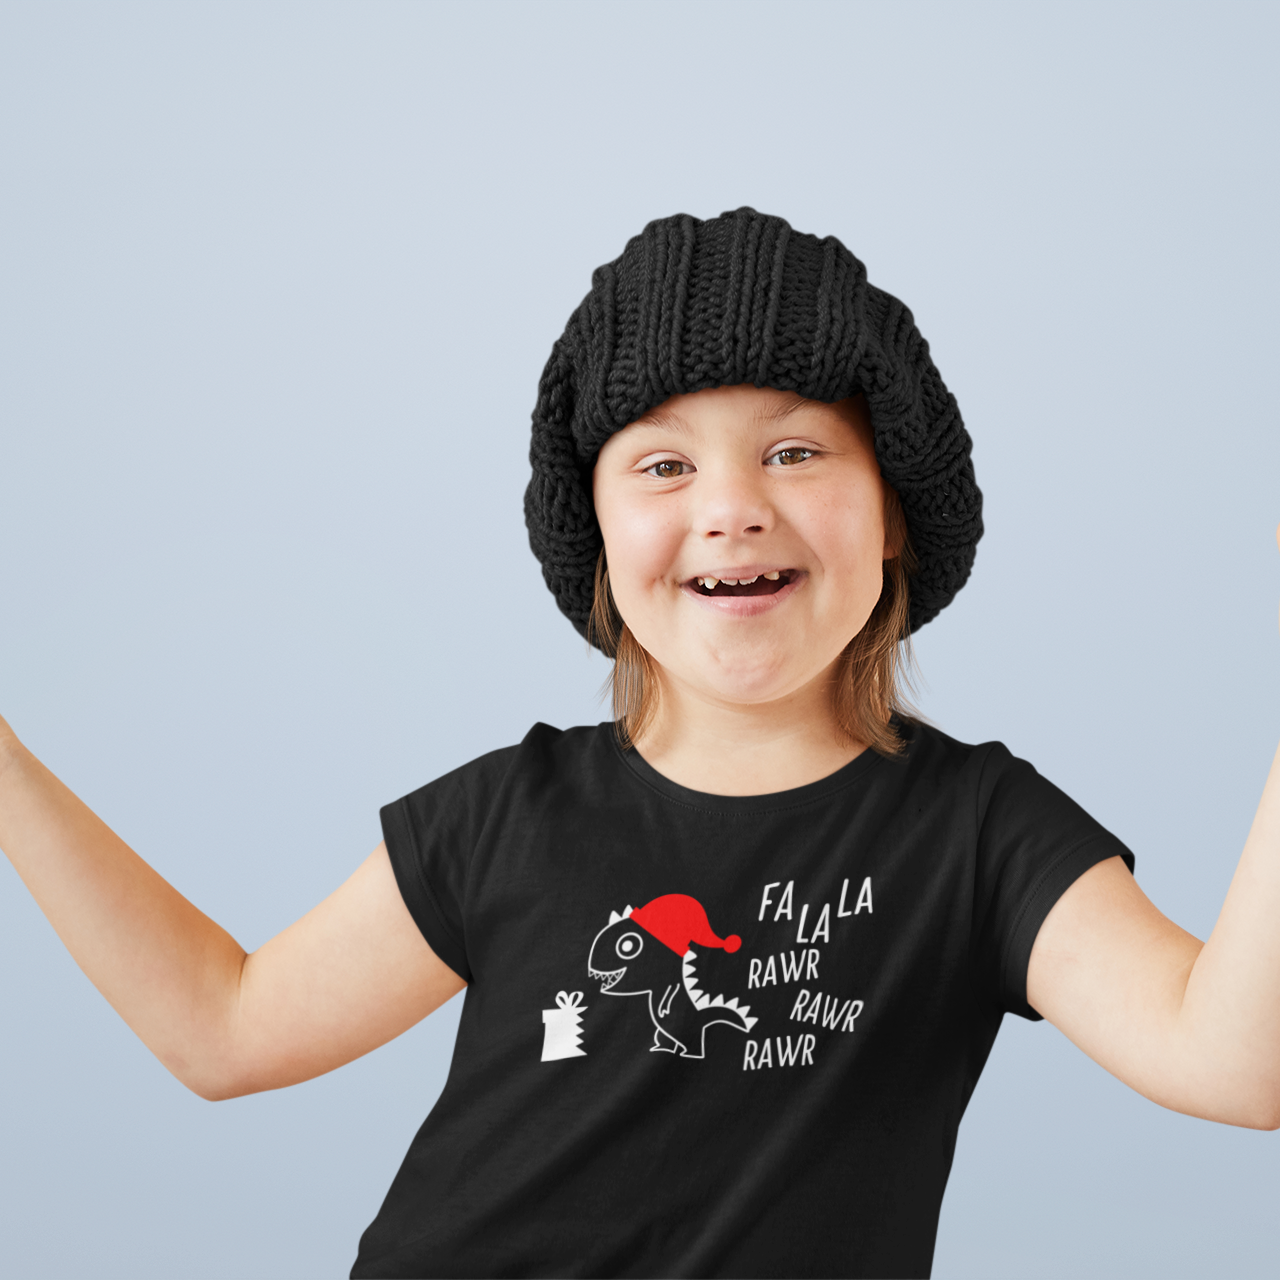 Smiling girl with down syndrome wearing black beanie and black shirt with dino 'Fla La La Rawr Rawr Rawr' print by KMLeon.